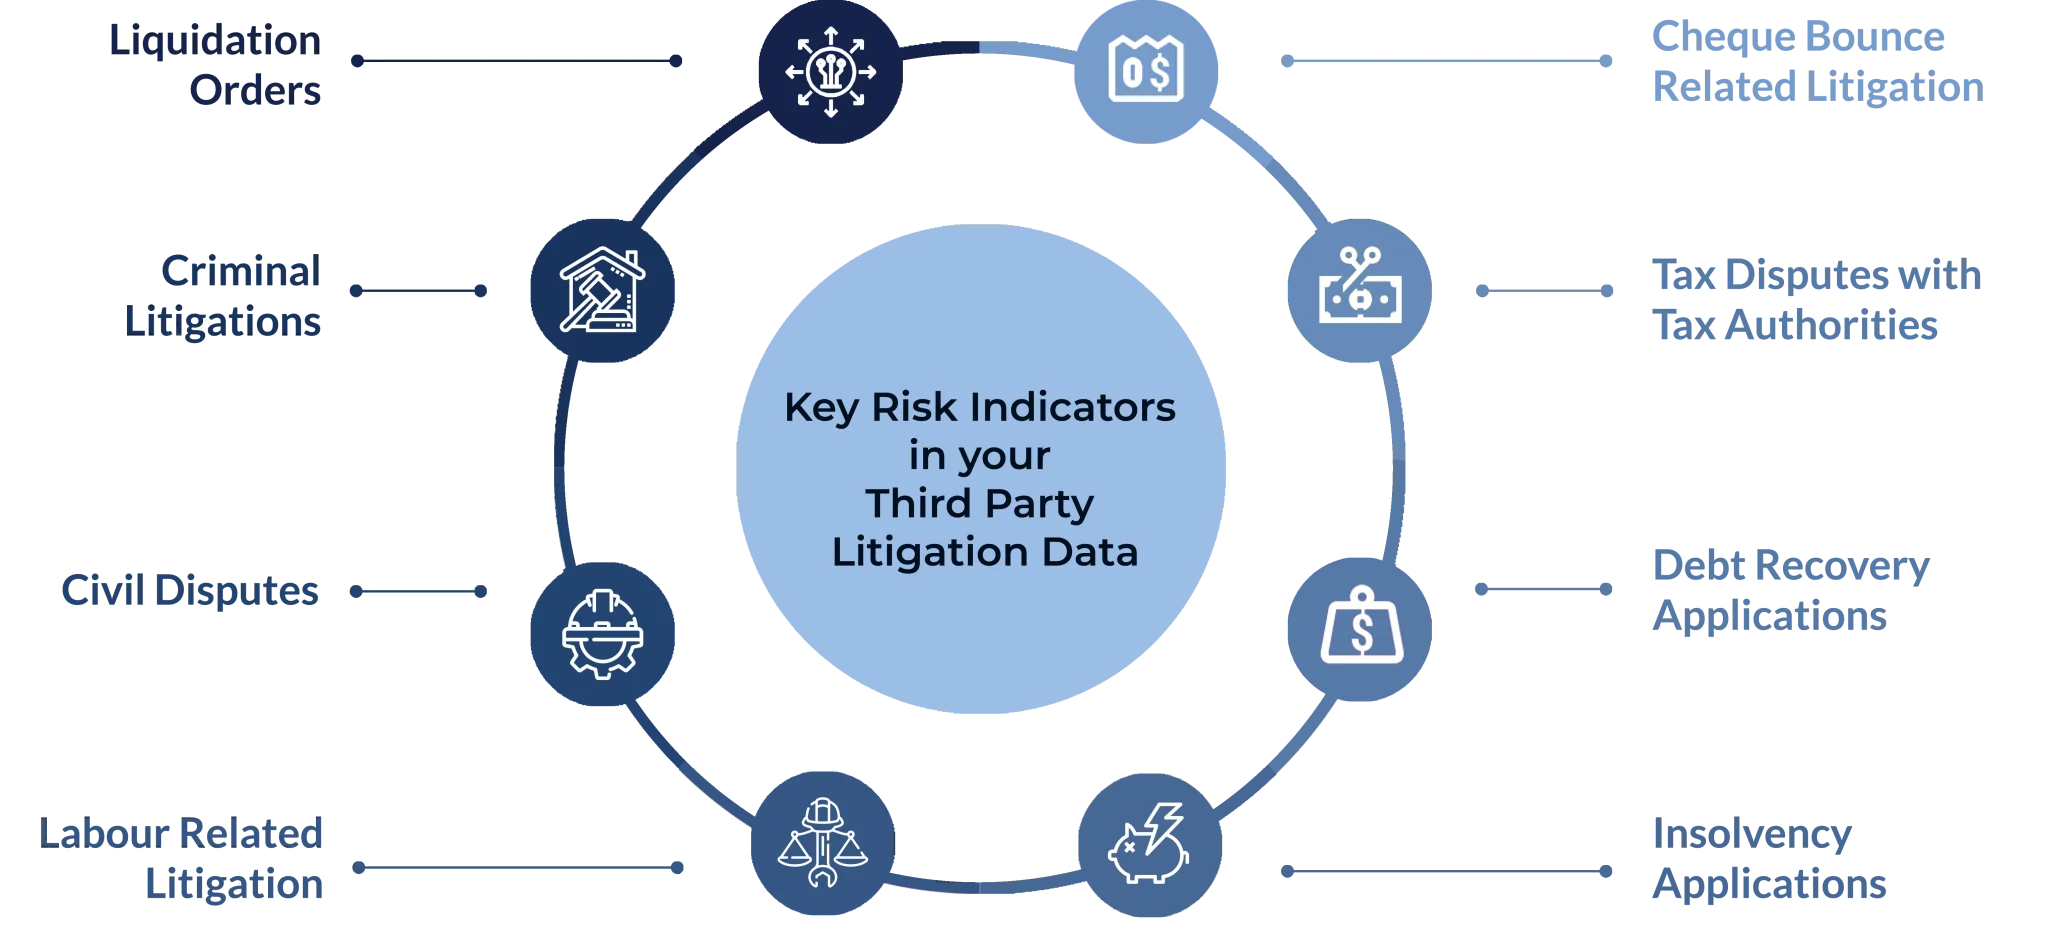 8 key risk indicators you can identify using Litigation Data